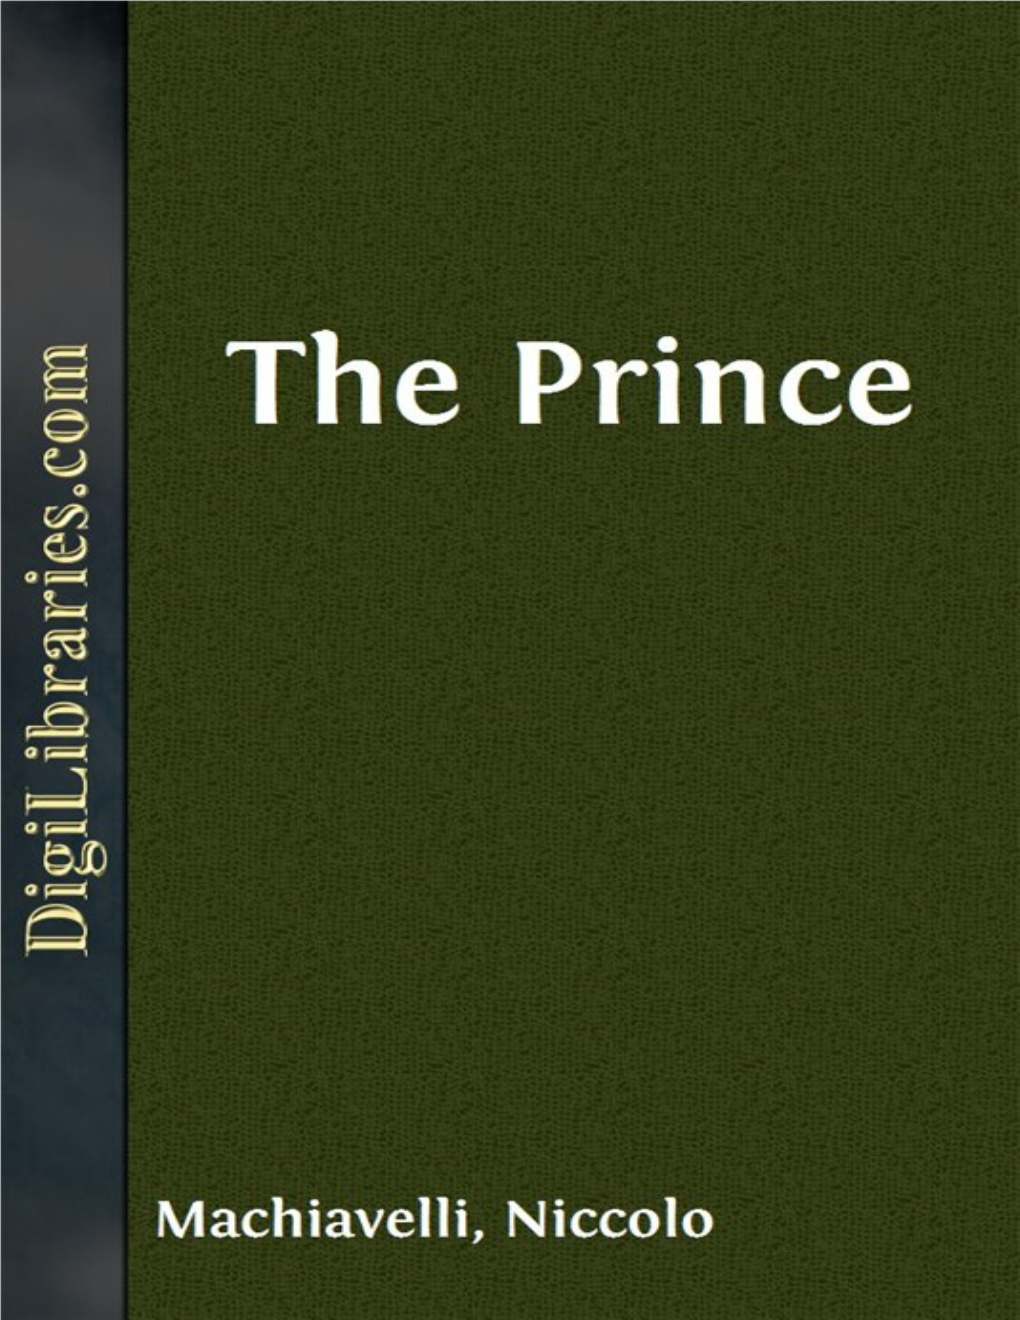 THE PRINCE by Nicolo Machiavelli